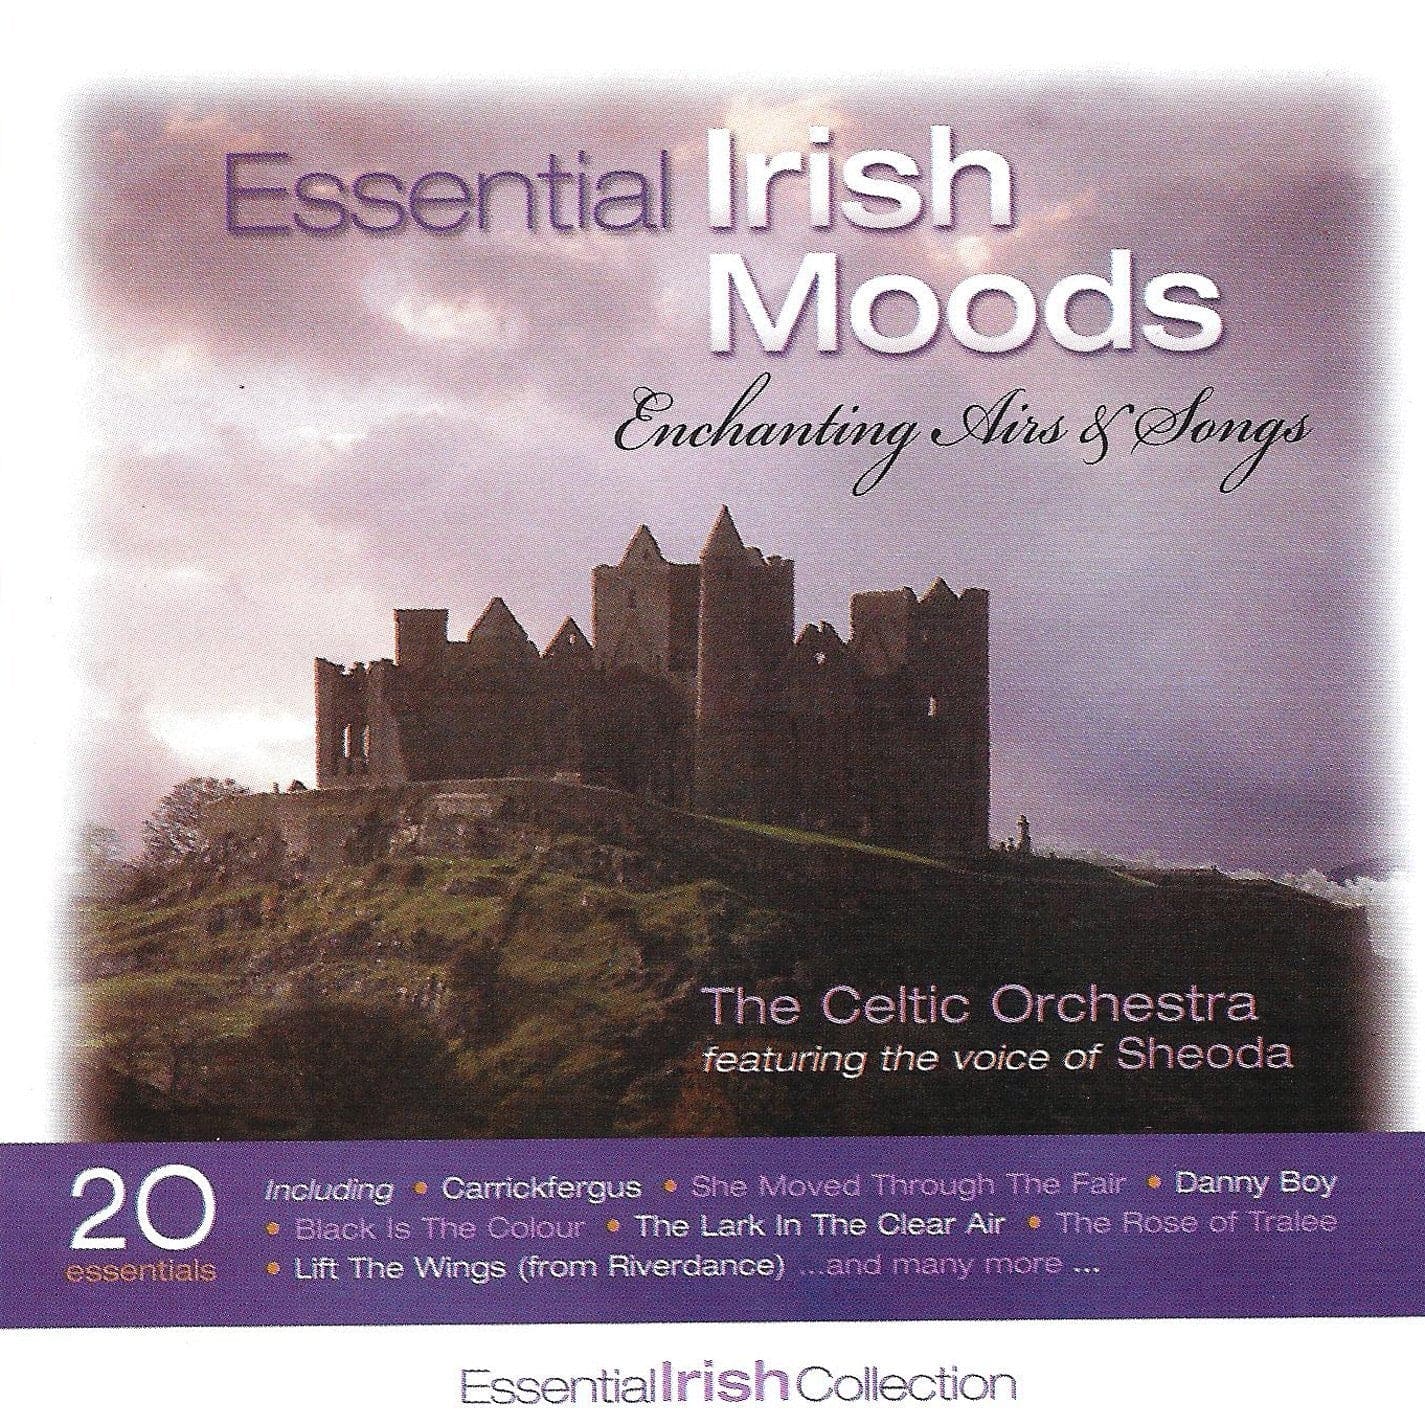 Essential Irish Moods - The Celtic Orchestra featuring Shoeda [CD]